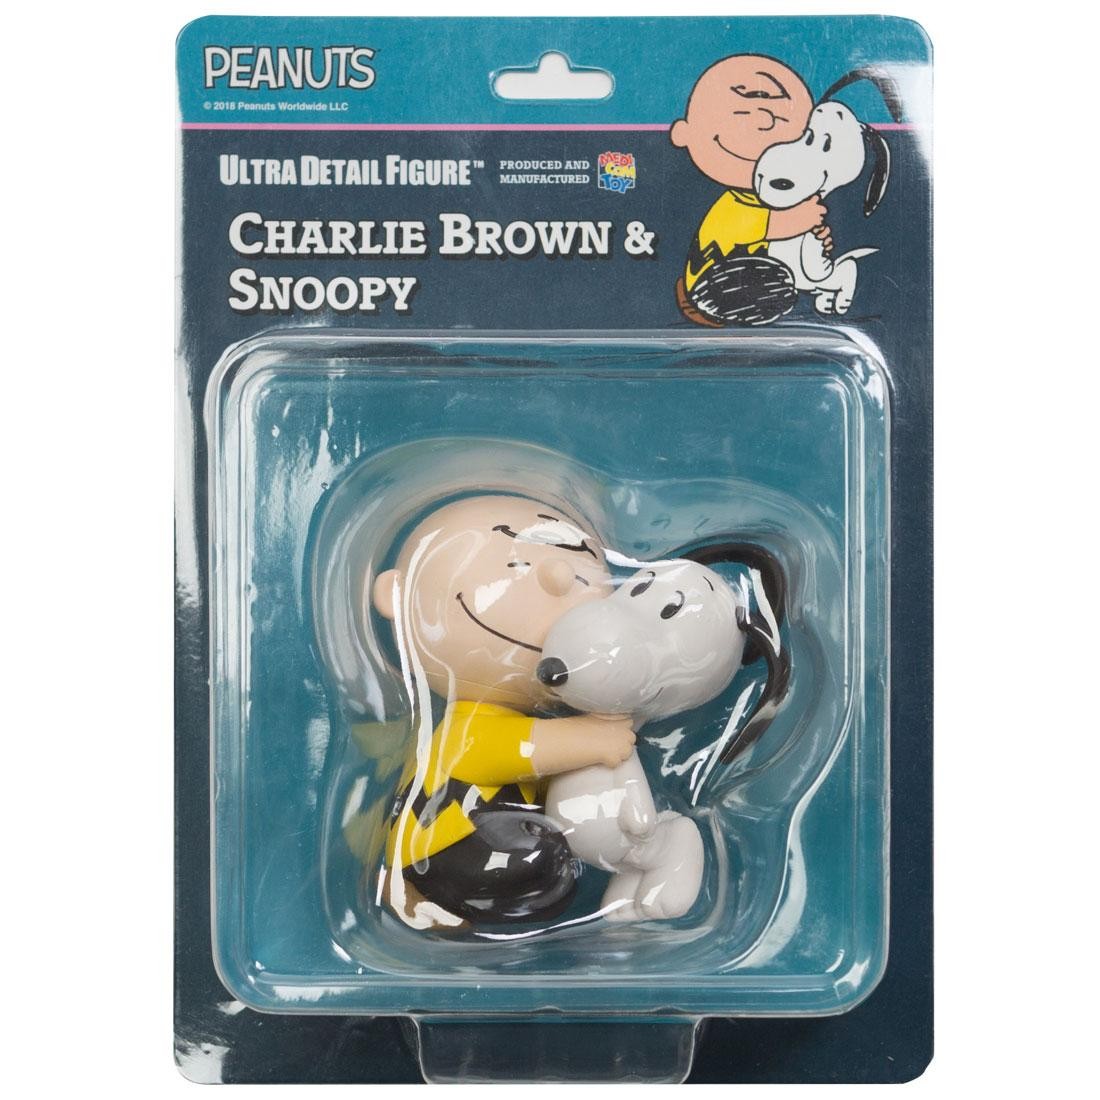 Medicom UDF Peanuts Series 8 Charlie Brown And Snoopy Ultra Detail